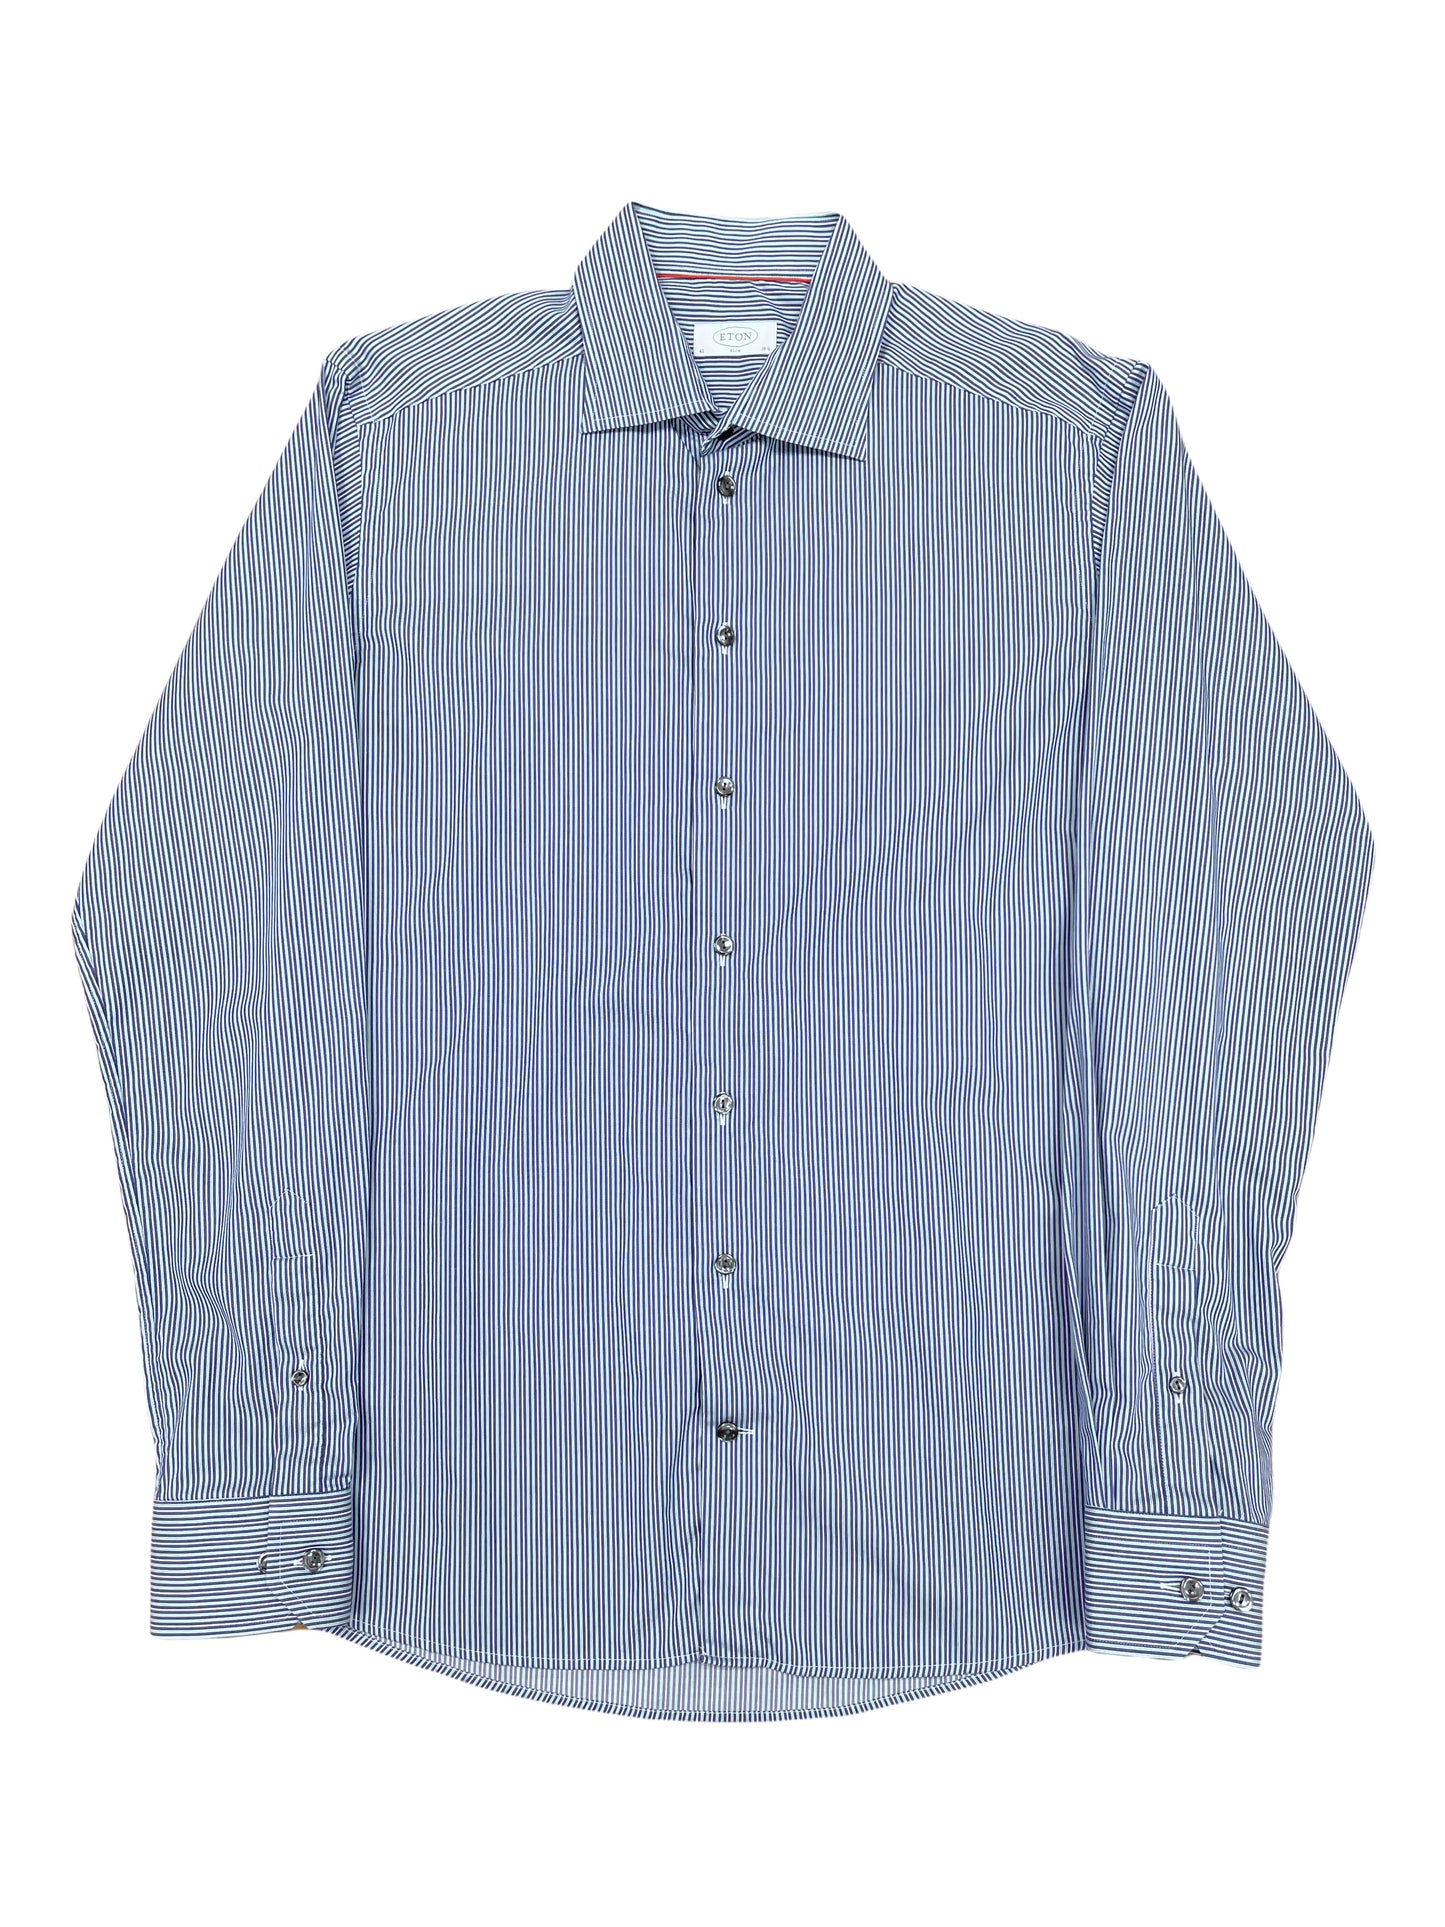 Eton Blue with Green Striped Shirt 16.5 - Large